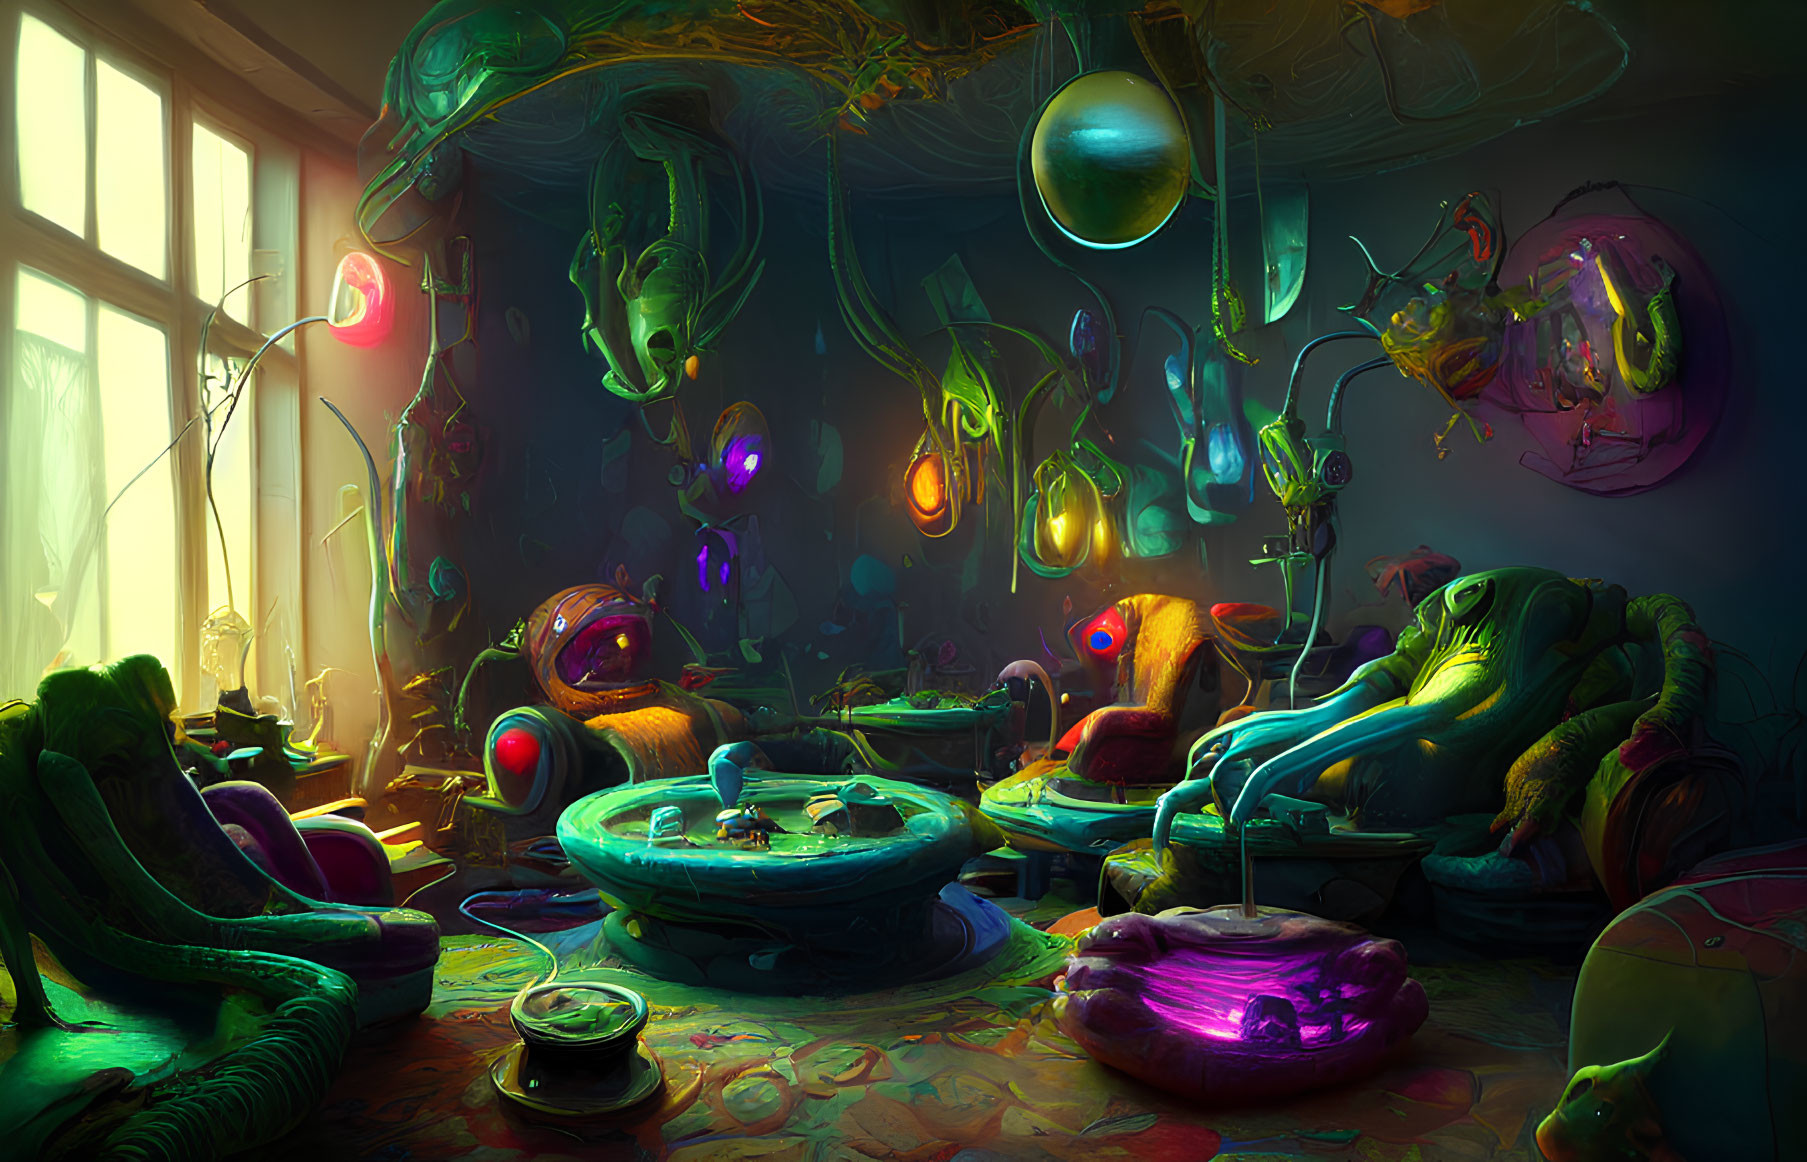 Vibrant Bioluminescent Room with Alien Decor